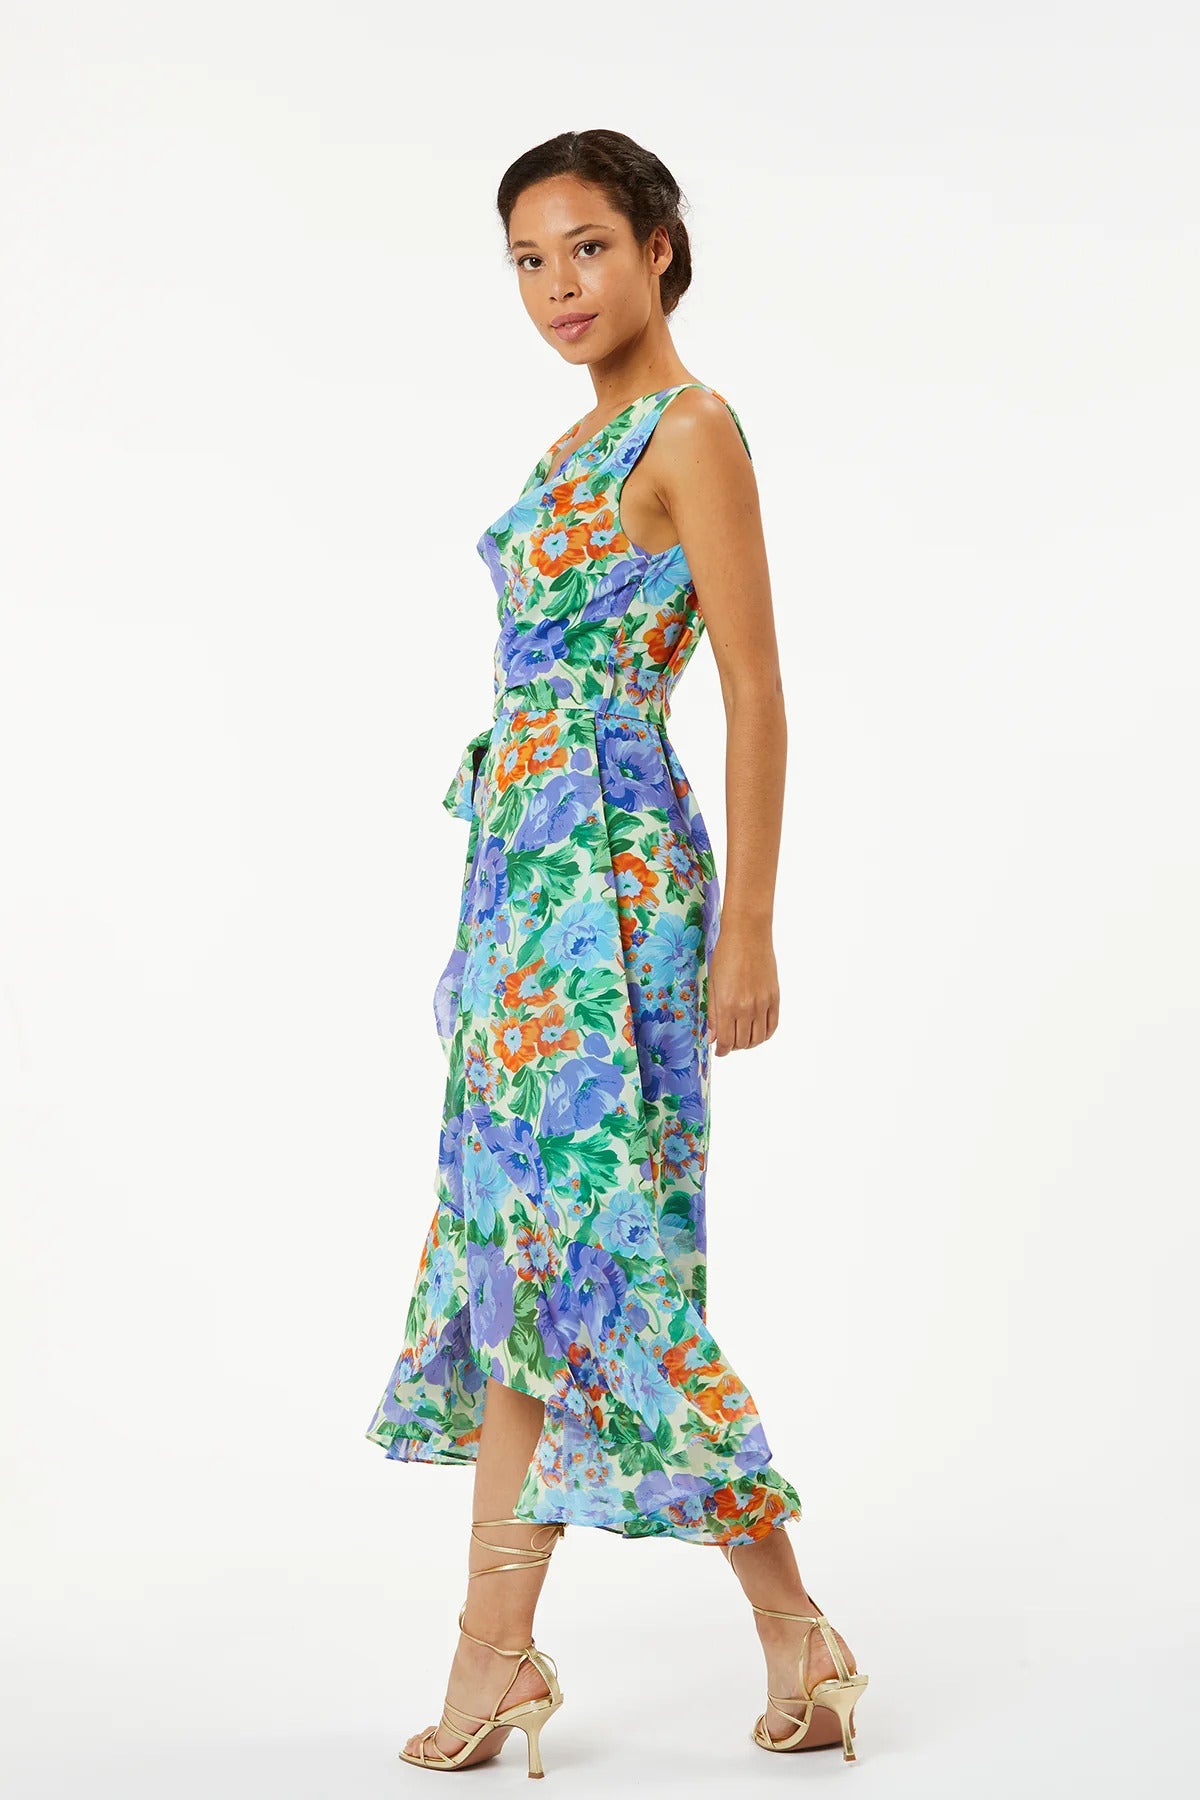 Zibi London - Janet Cowl Neck Print Dress - 902020